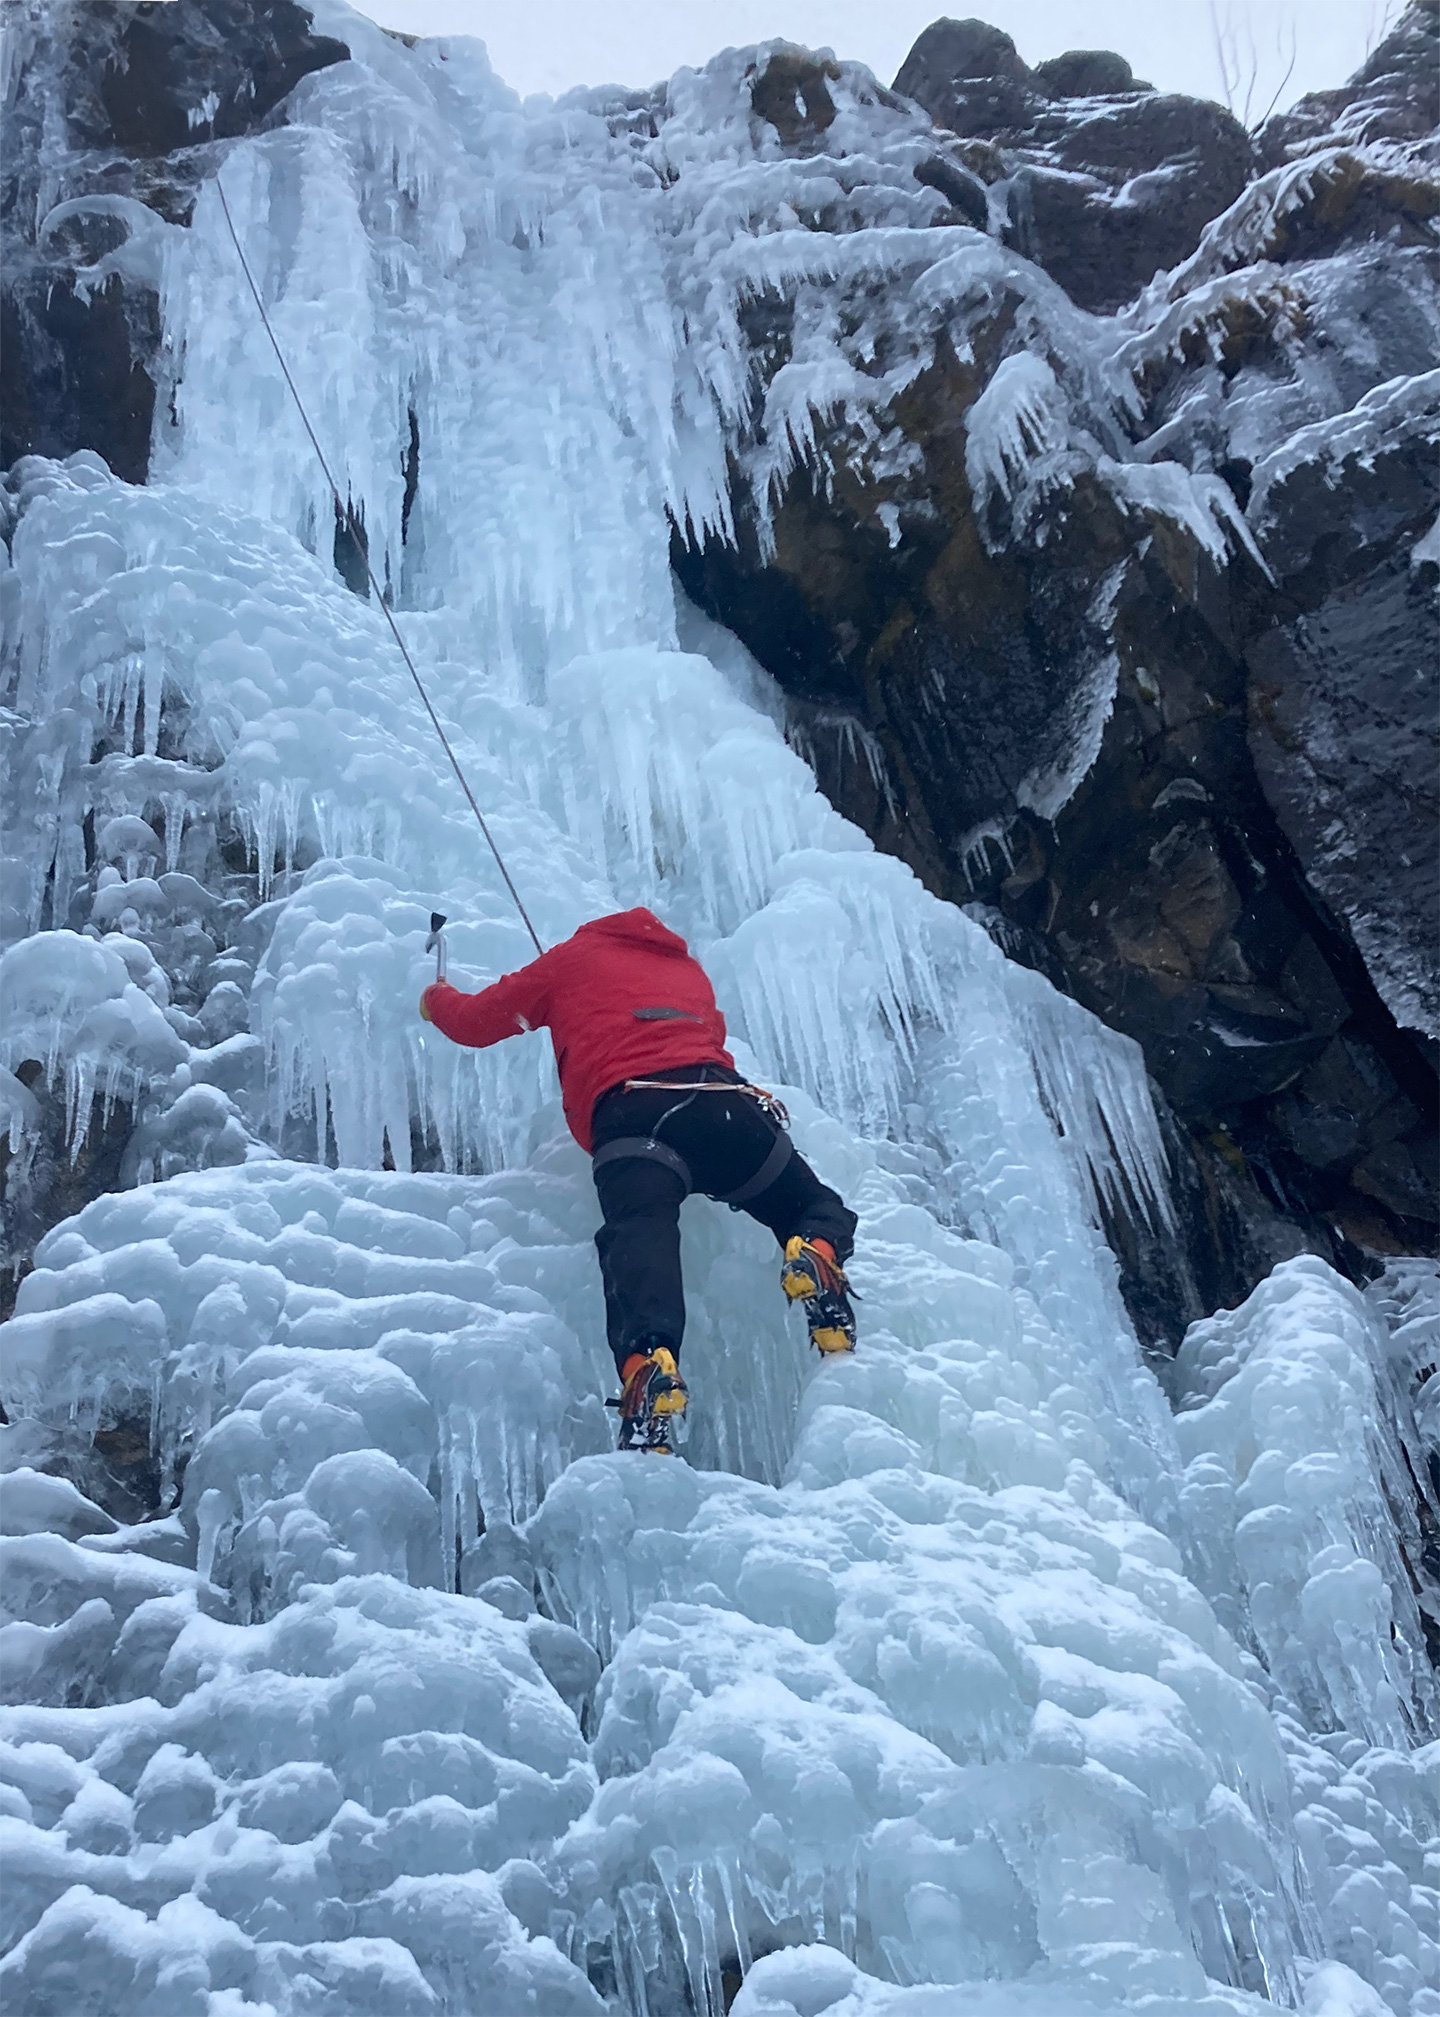 Climber ascending one of many ice waterfalls in Seyðisfjörður.